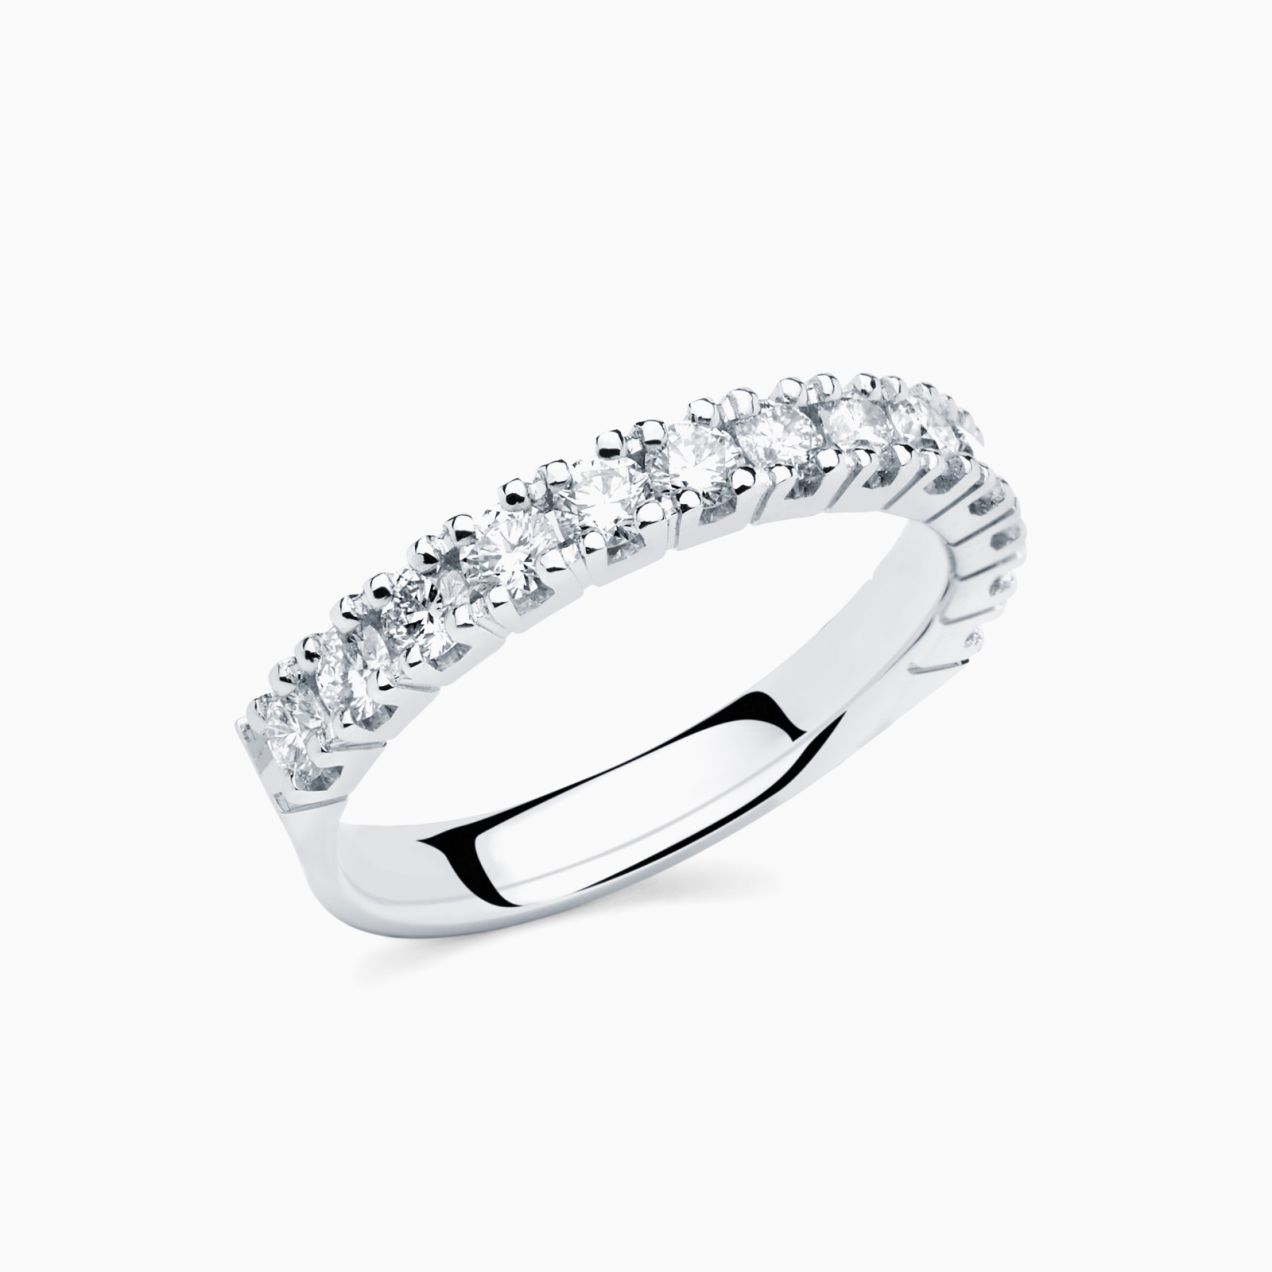 Engagement rings with diamonds RABAT Poetic